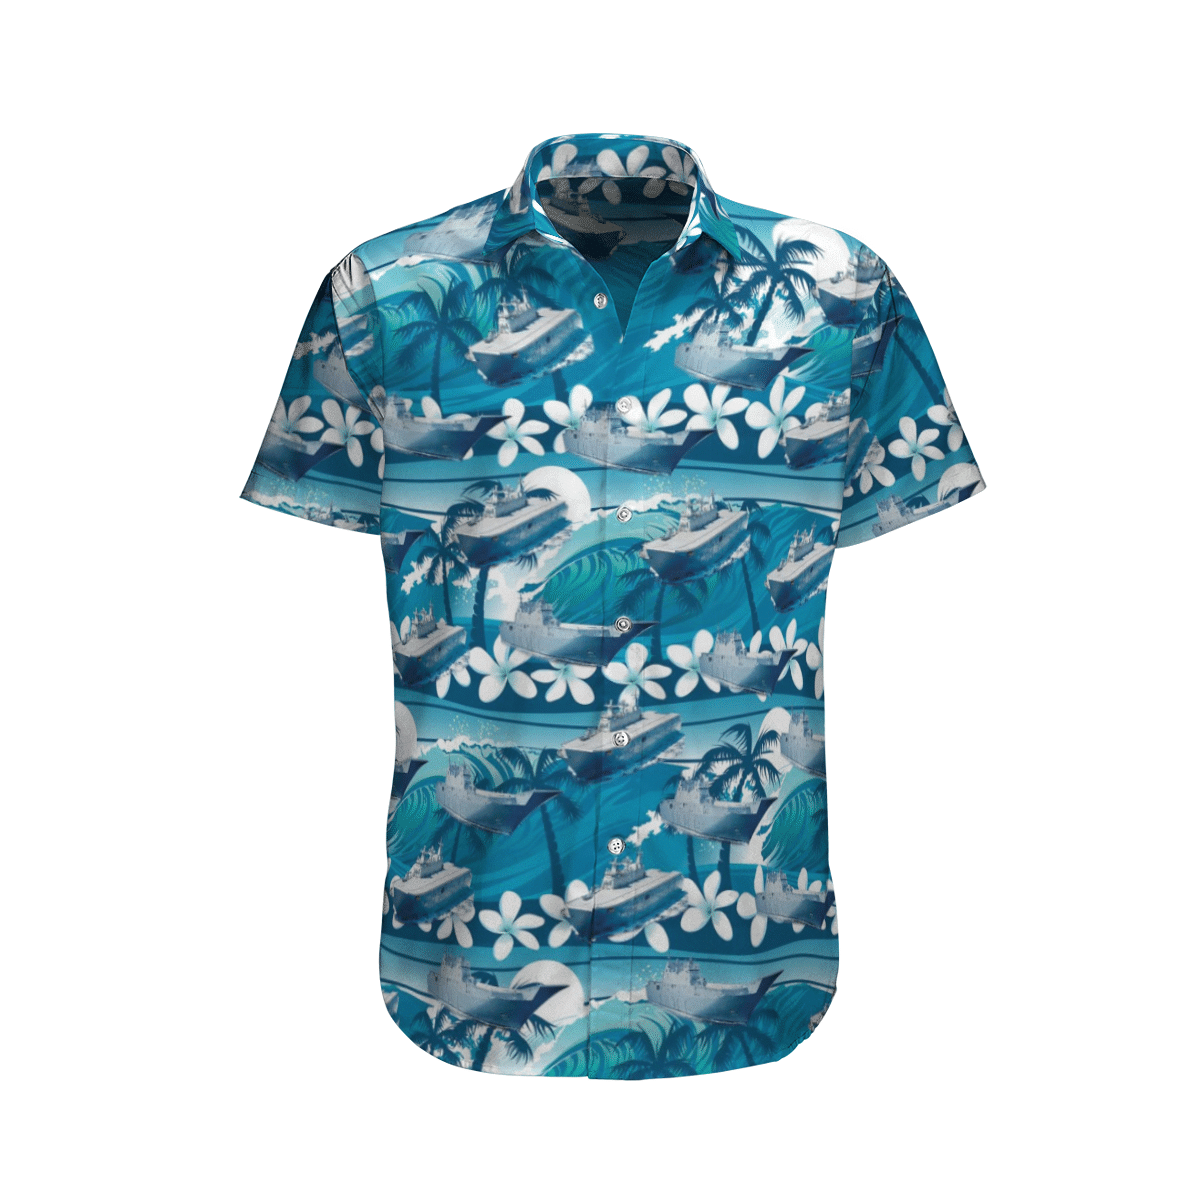 Enjoy your summer with top cool hawaiian shirt below 270